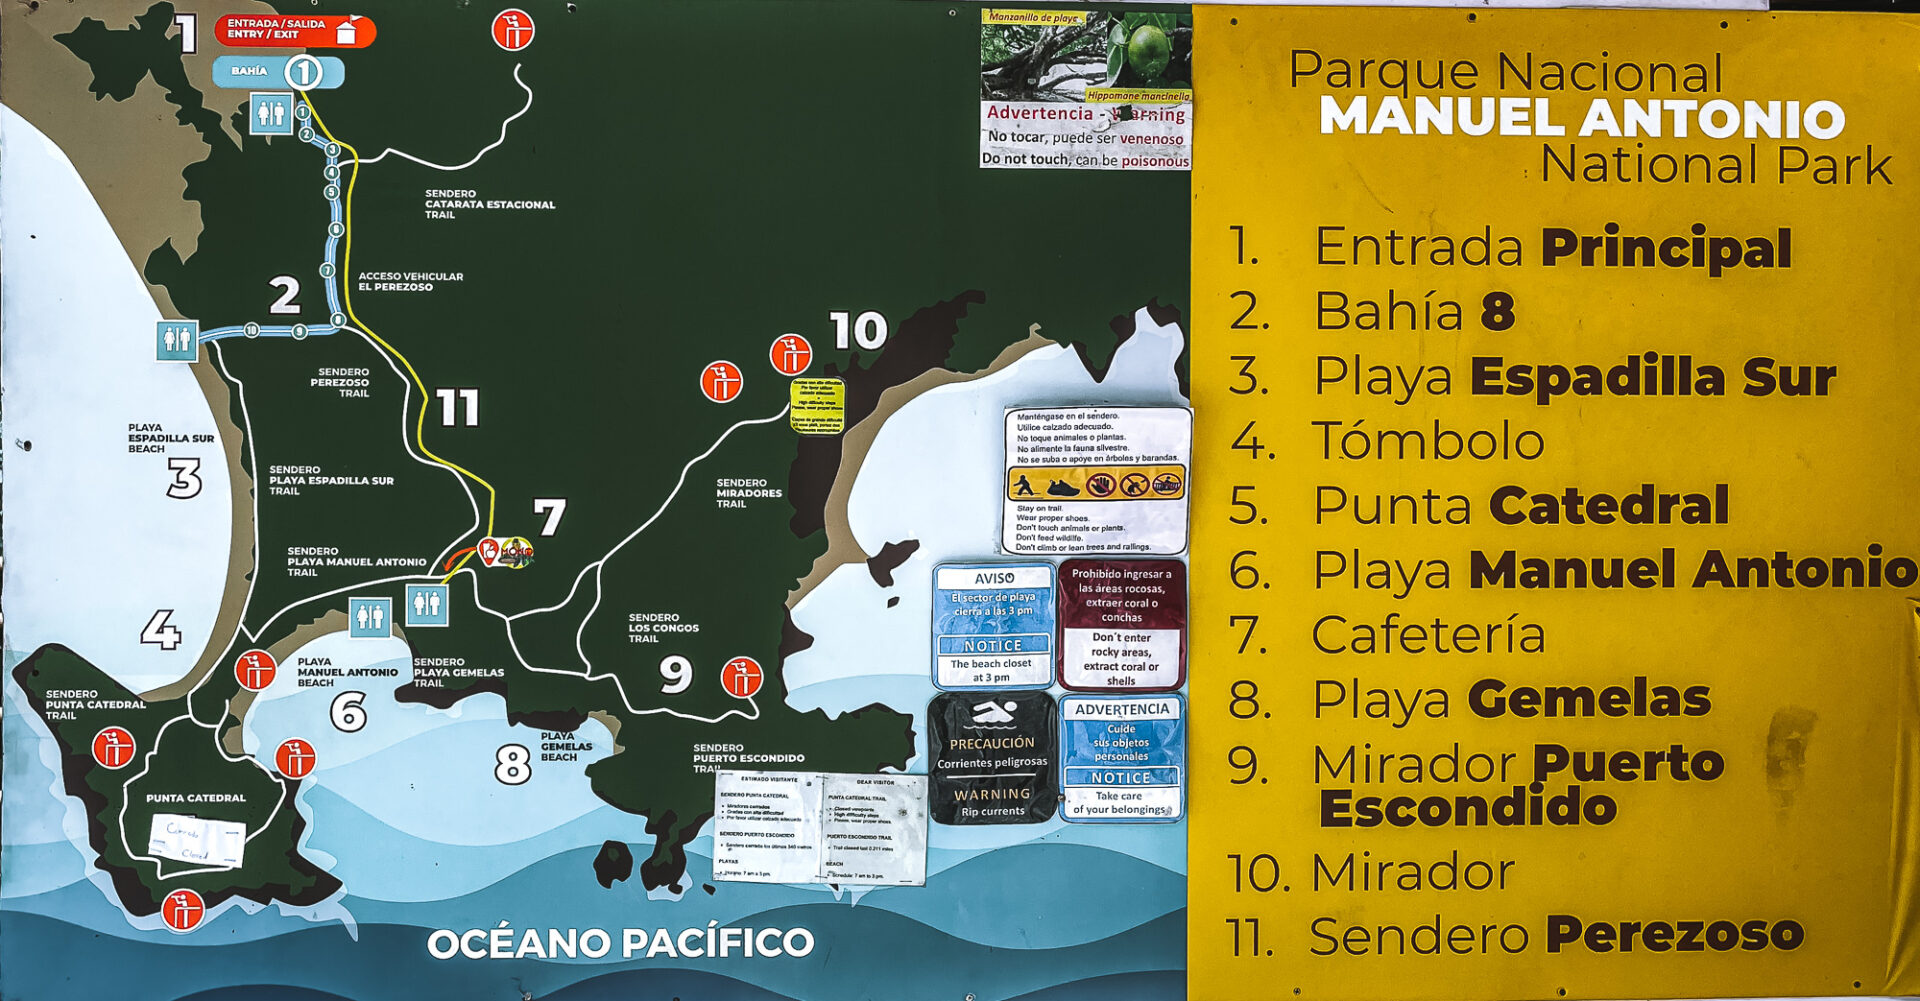 Manuel Antonio National Park Map